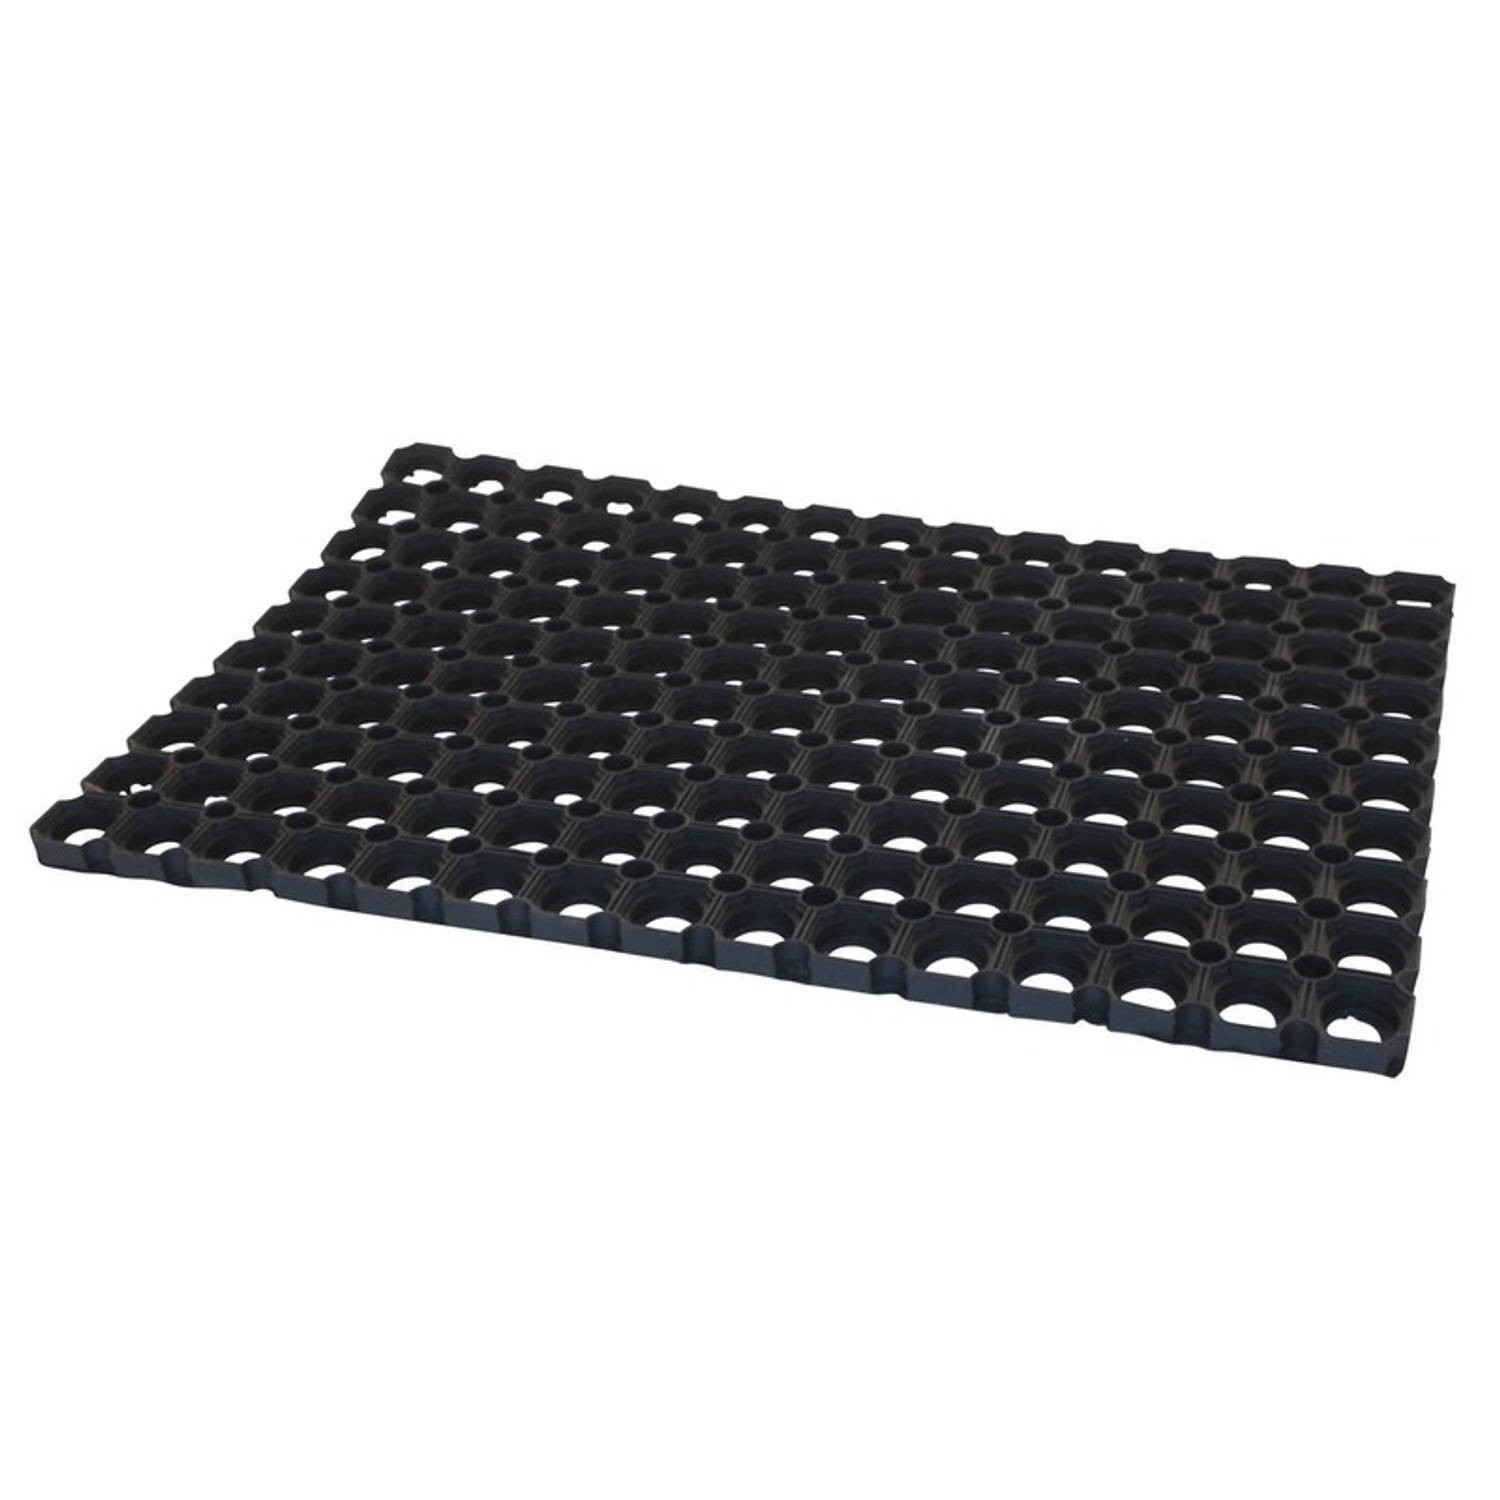 2x Buitenmatten / deurmatten rubber zwart 60 x 40 x 2.3 cm - Deurmatten